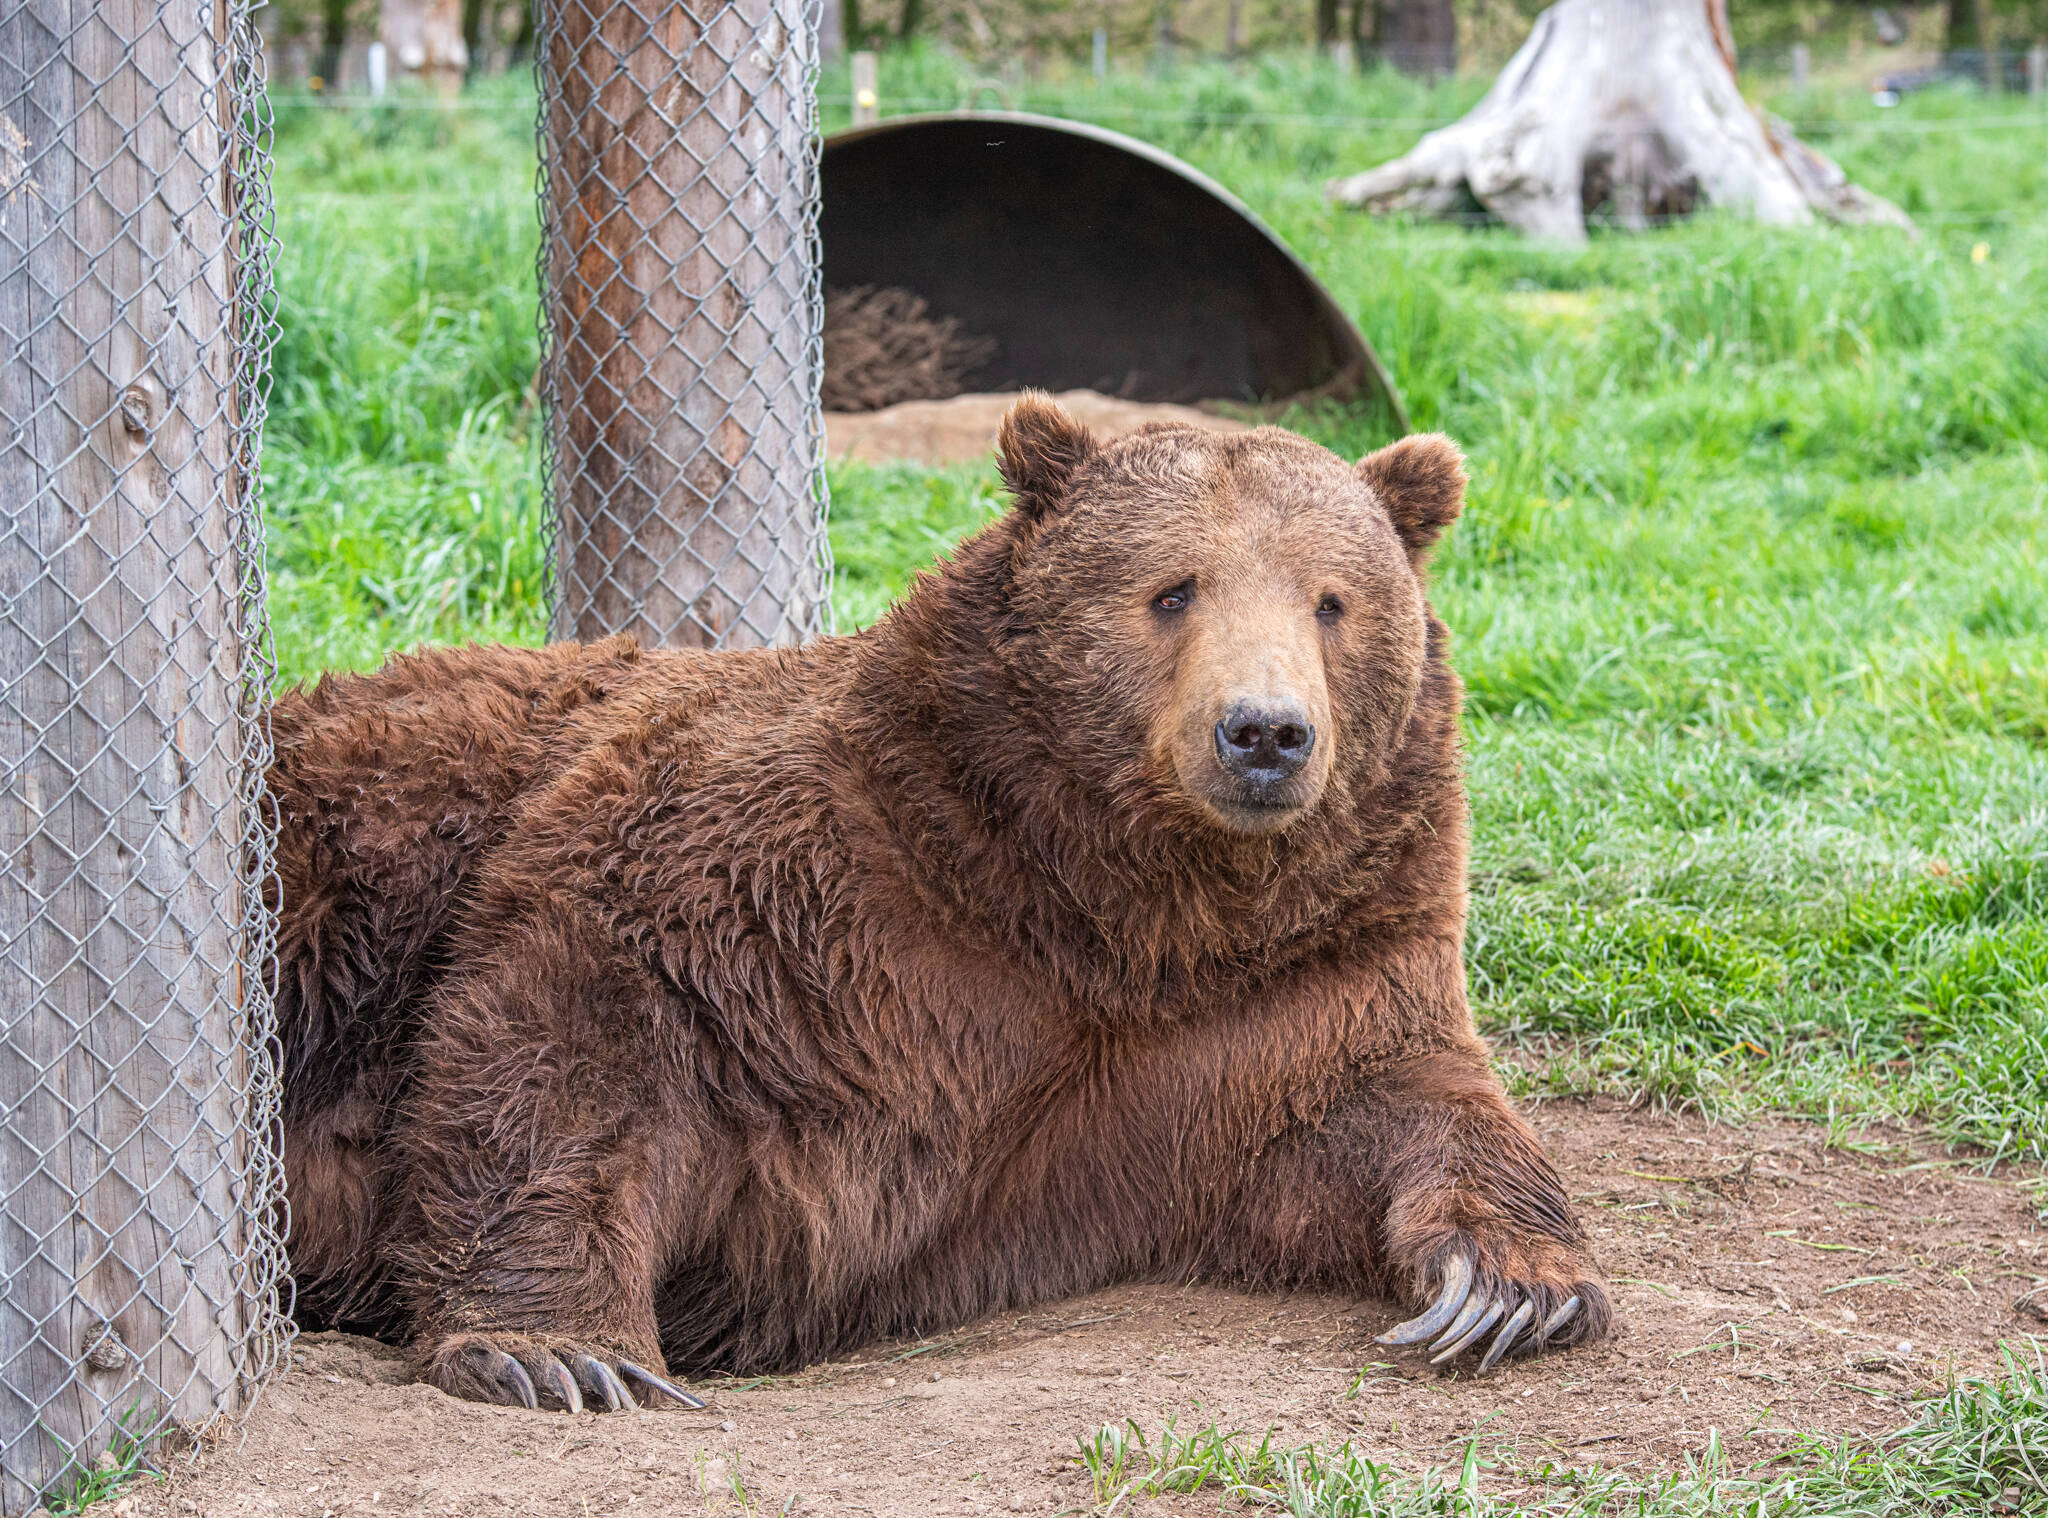 Fum is a 26-year-old Kodiak brown bear.